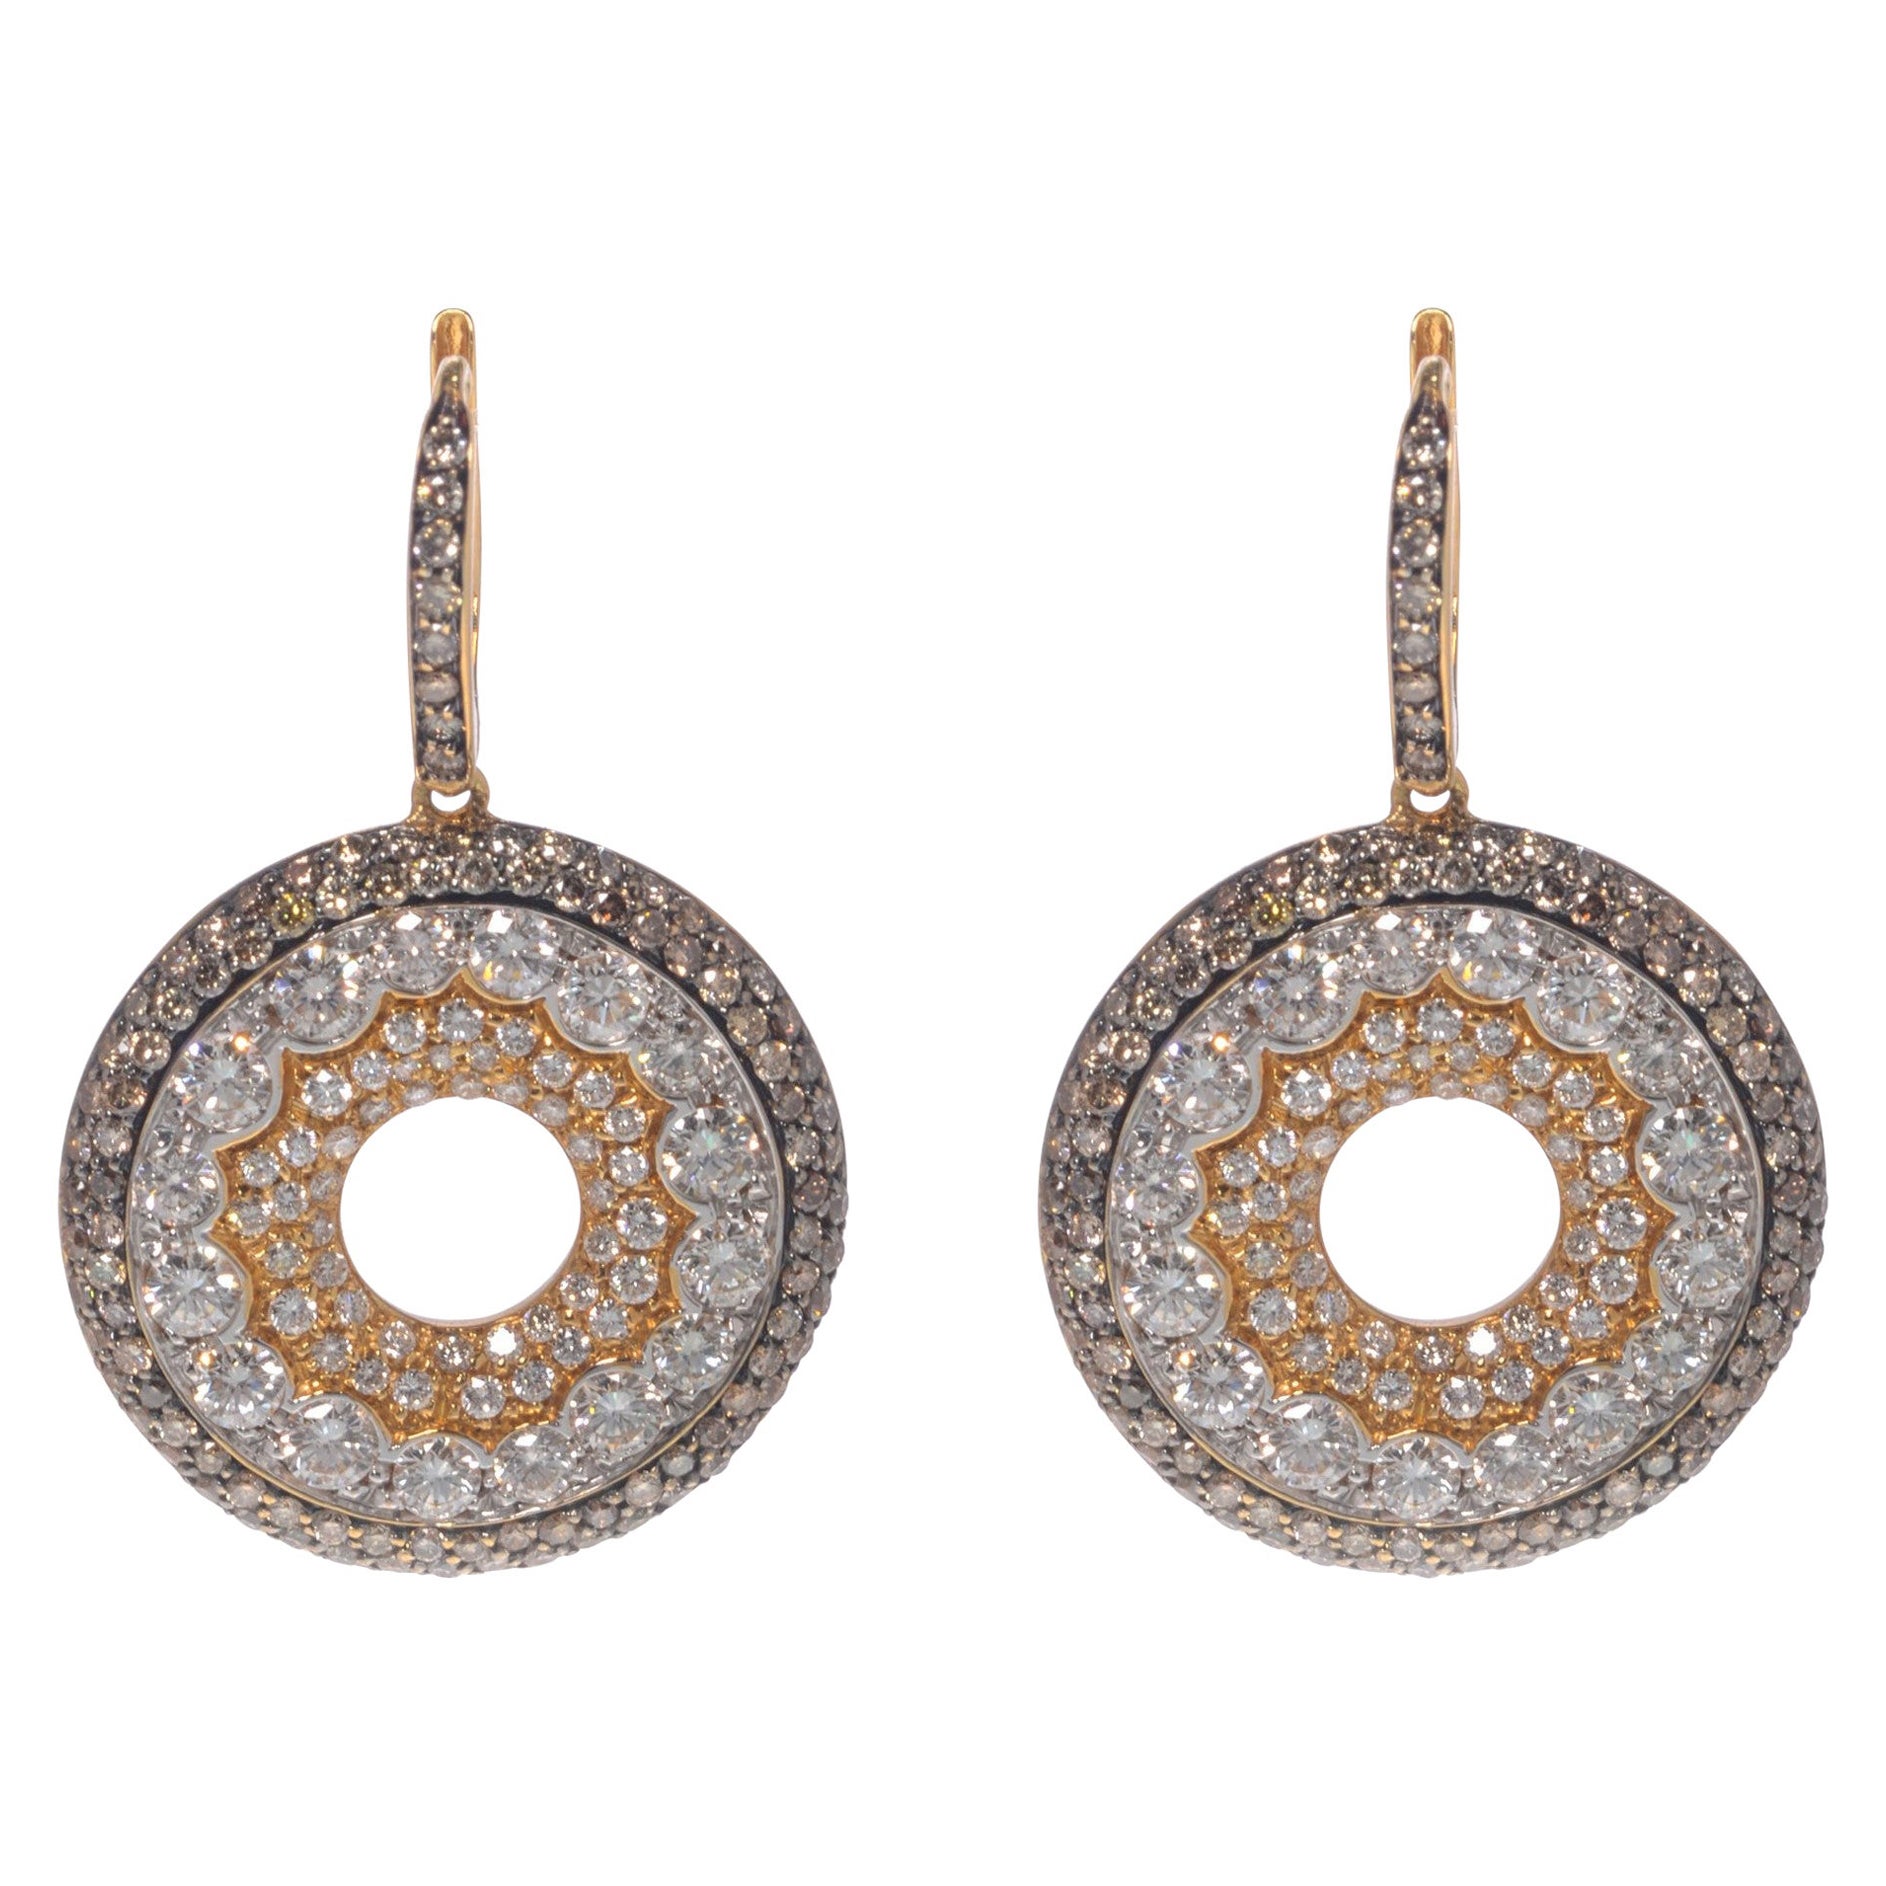 Luca Carati White & Brown Diamond Drop Earrings 18K Yellow Gold 5.73Cttw For Sale